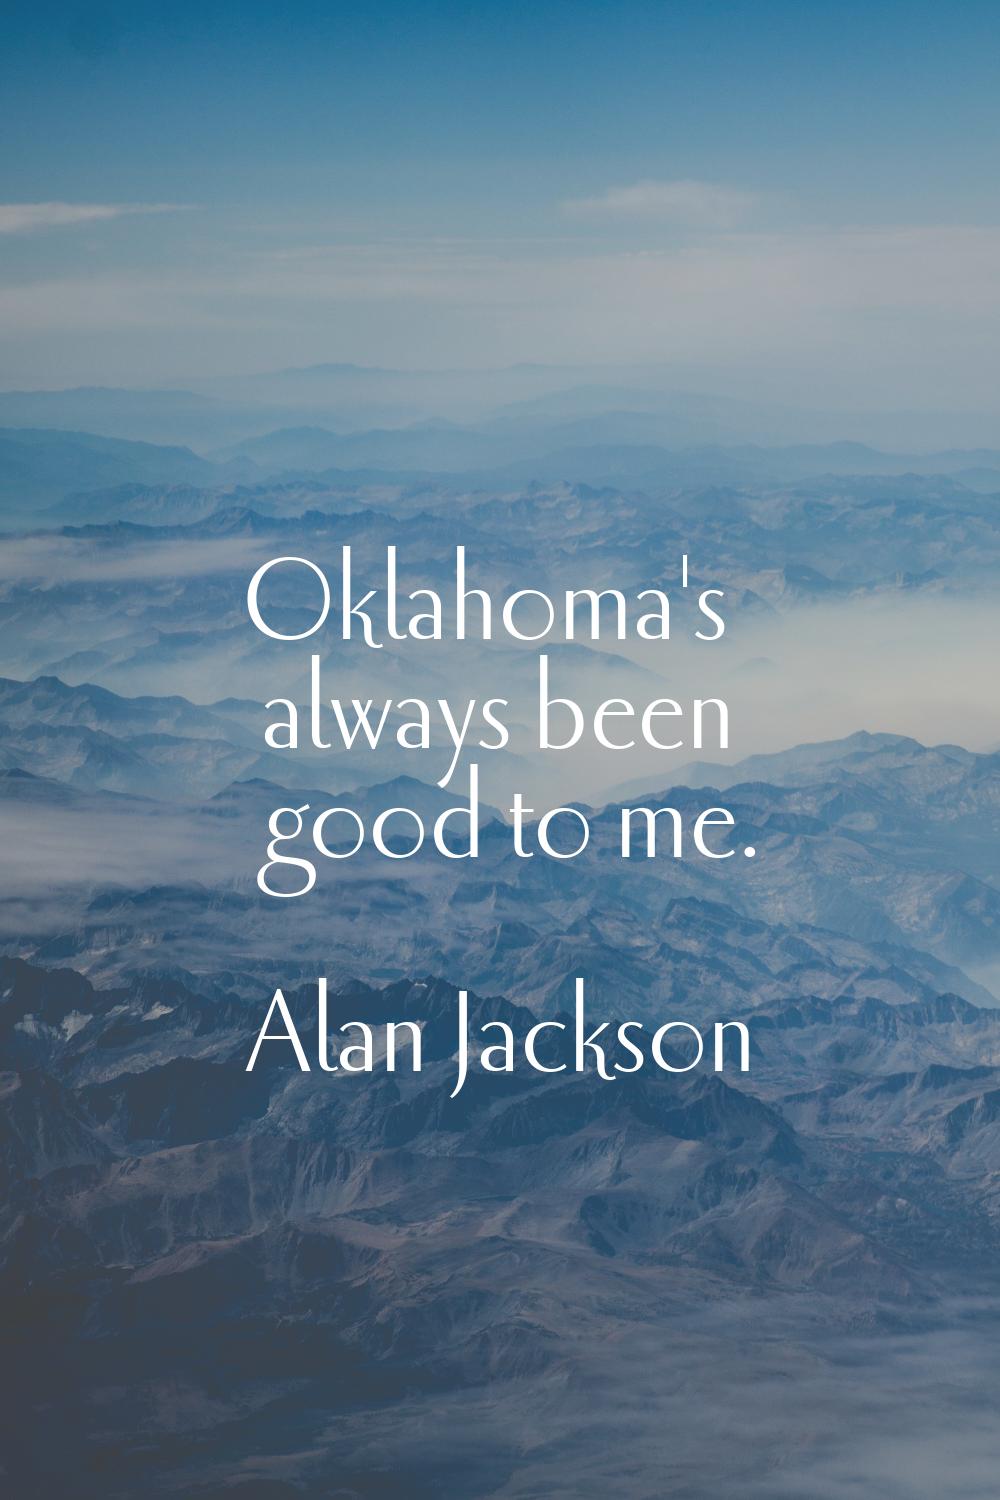 Oklahoma's always been good to me.